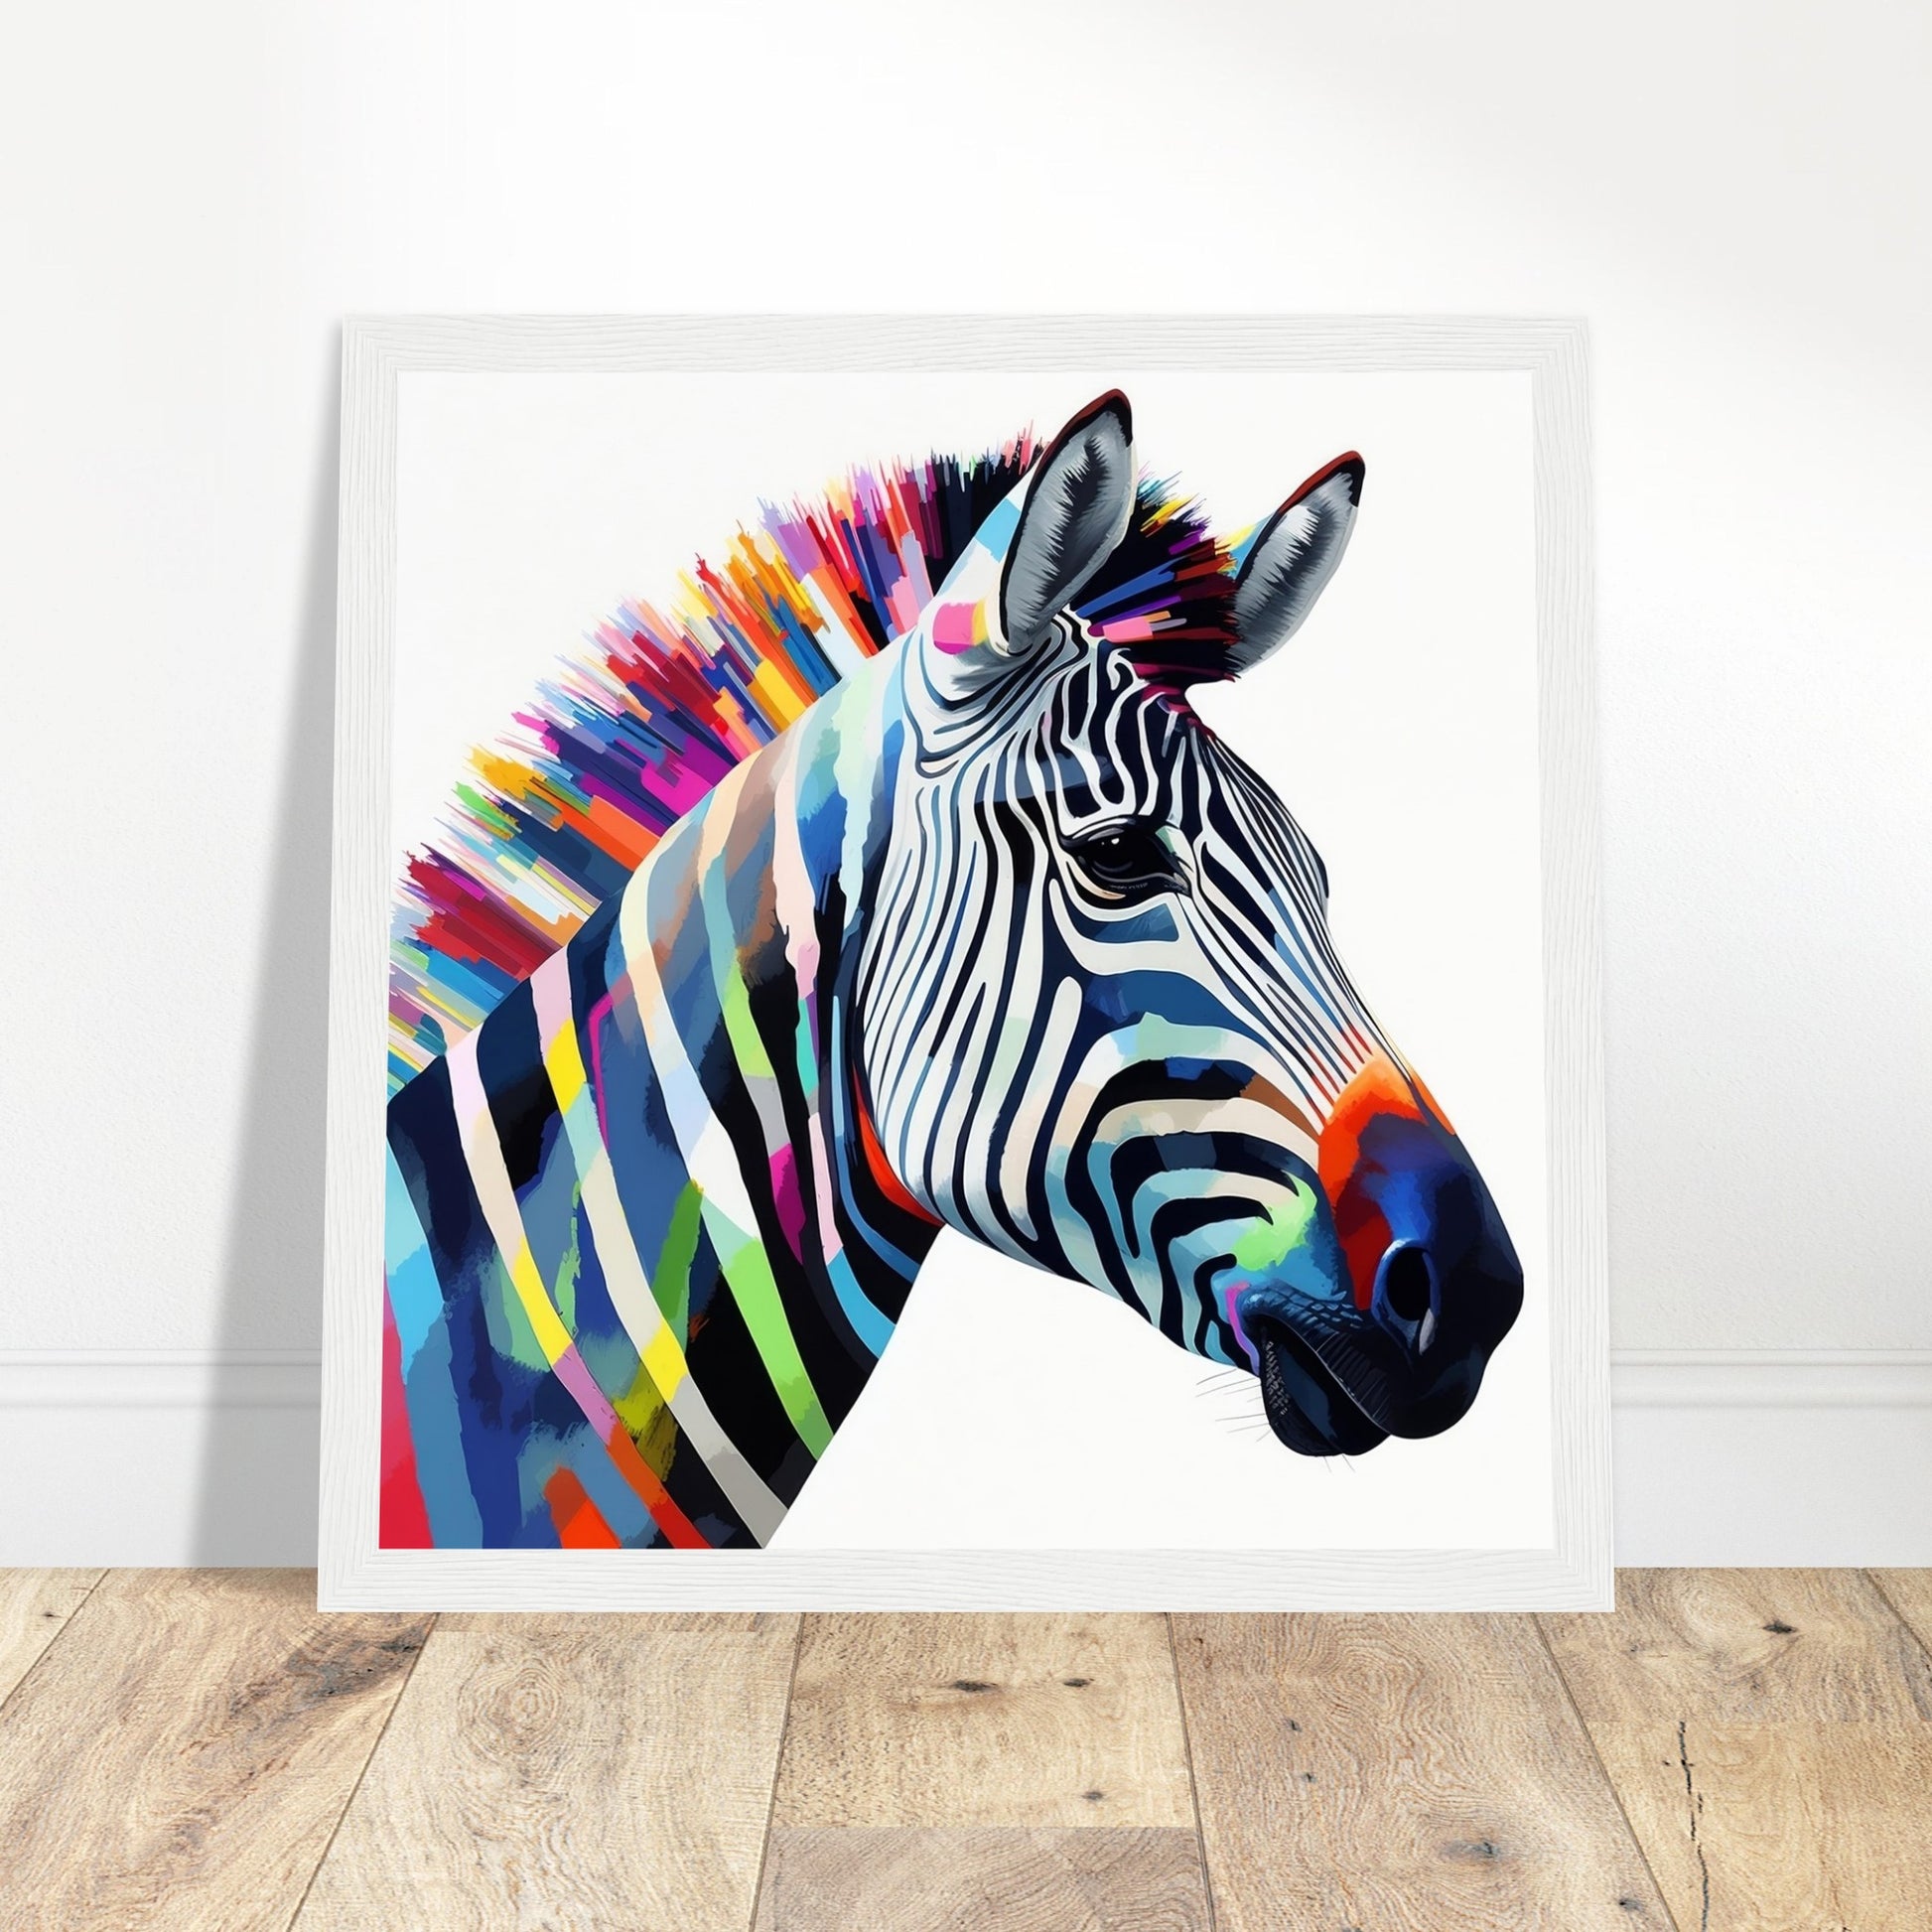 Colourful Zebra Artwork - Print Room Ltd Dark wood frame 70x70 cm / 28x28"